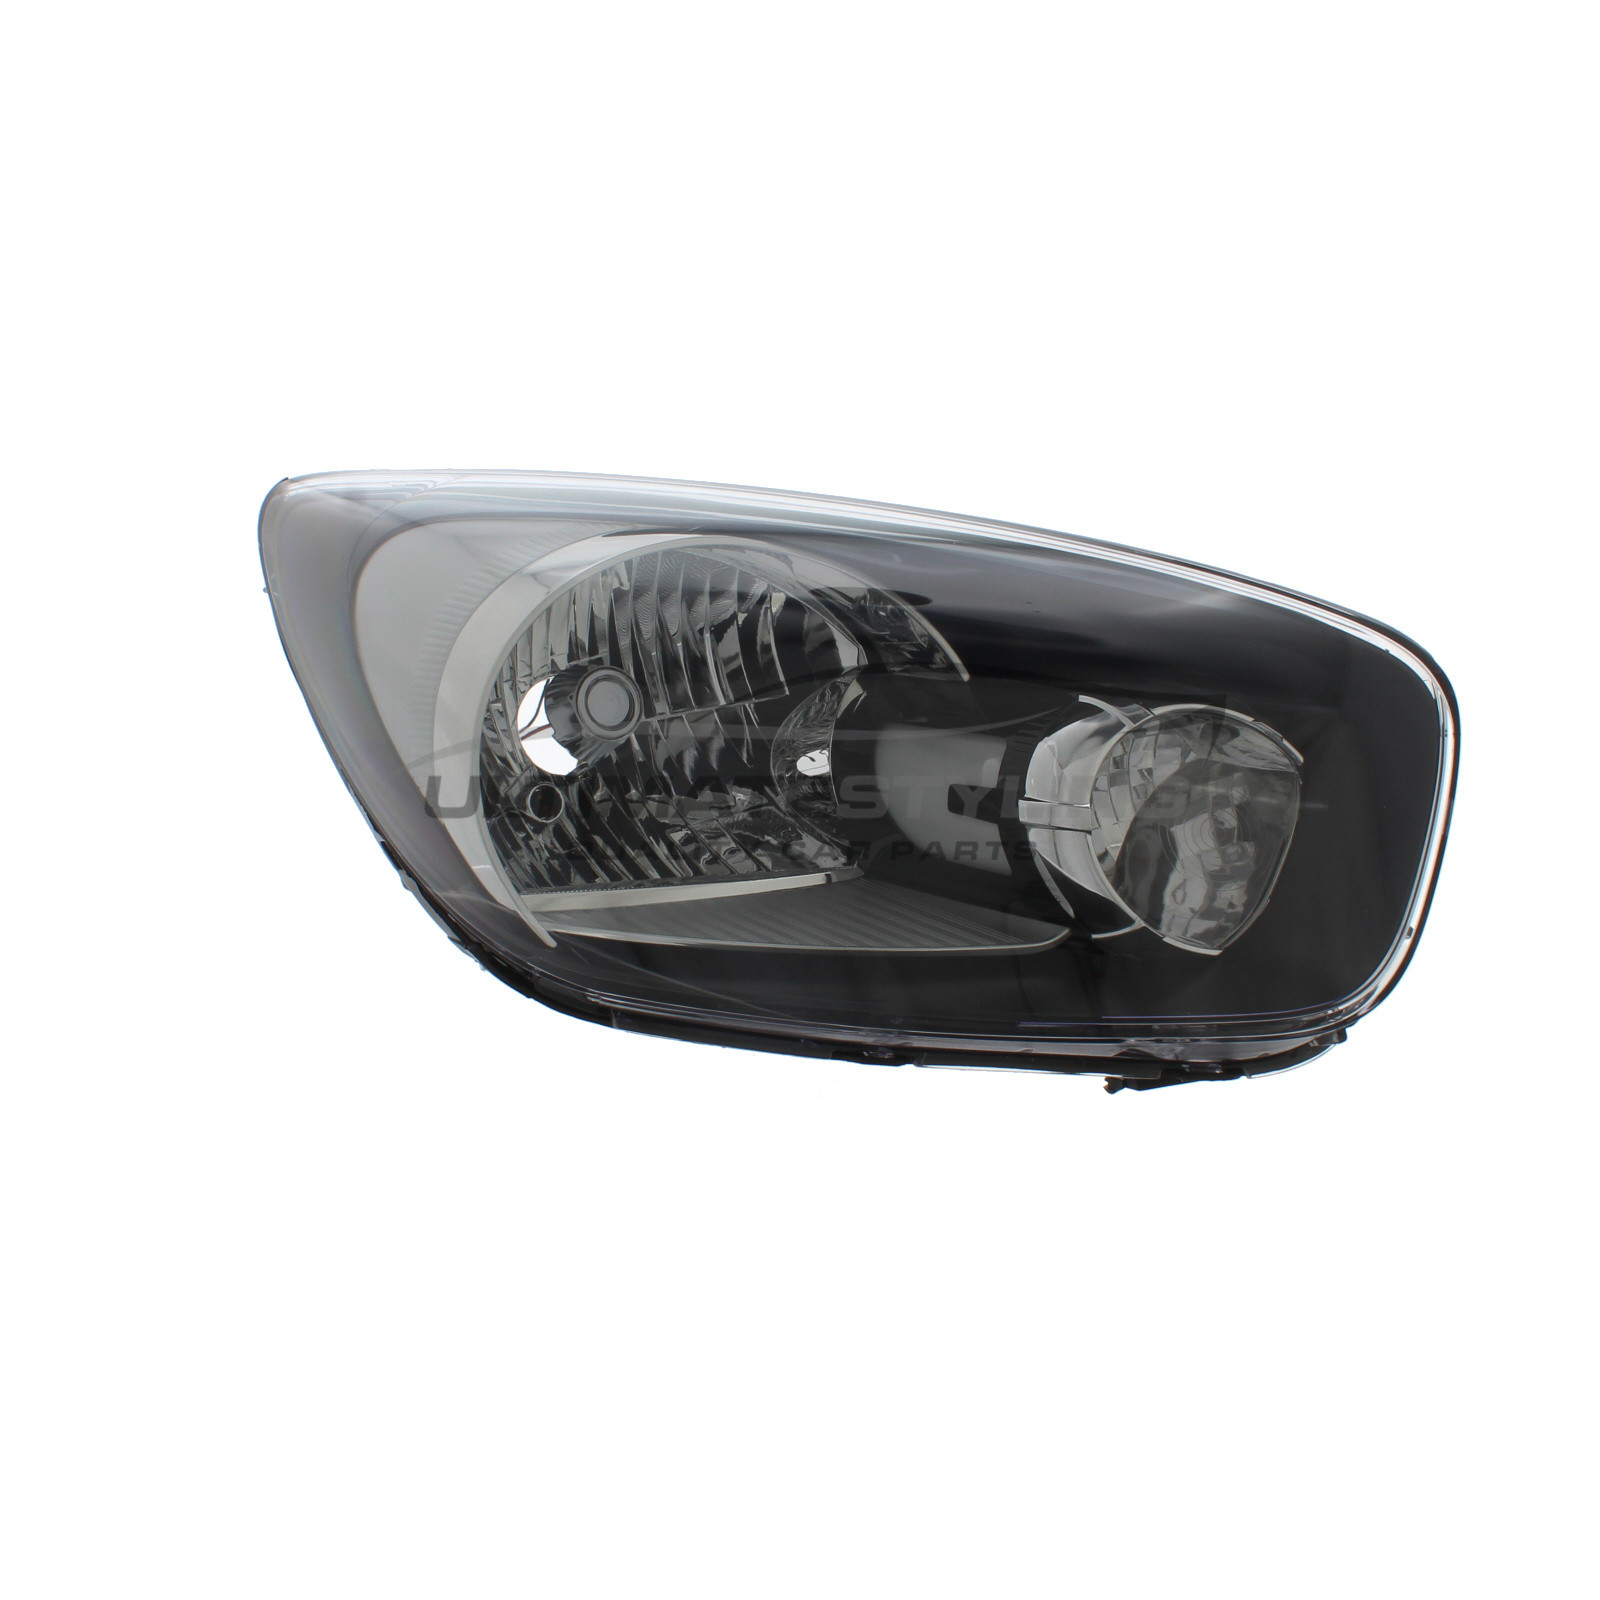 Headlight / Headlamp for Kia Picanto